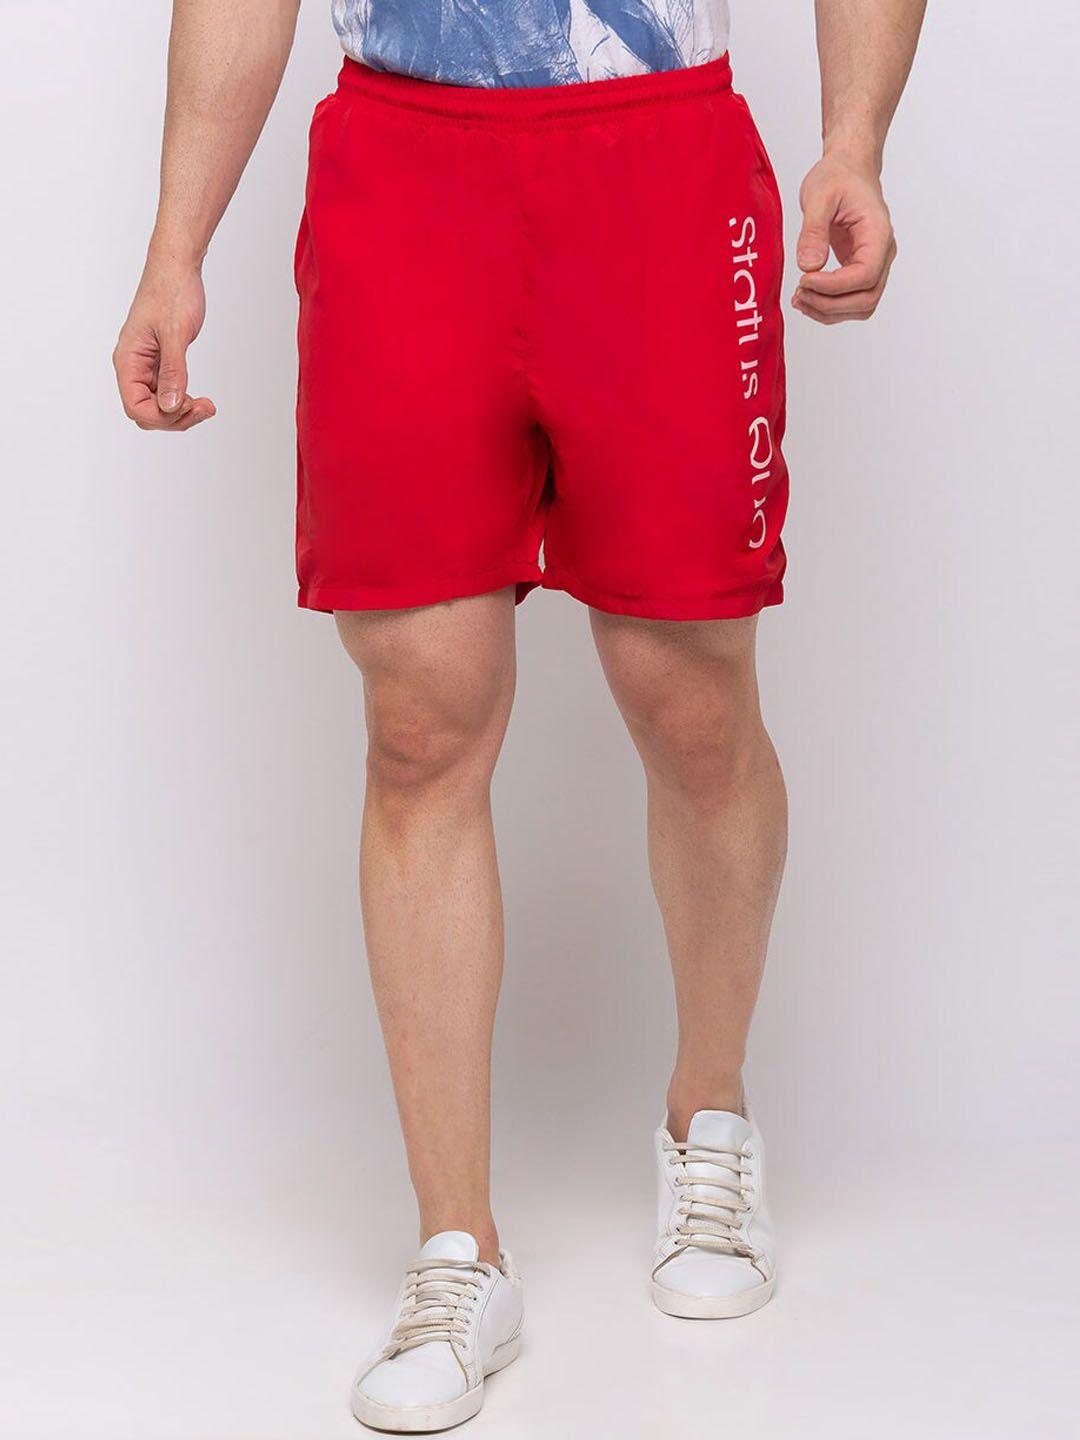 status quo men printed regular fit sports shorts